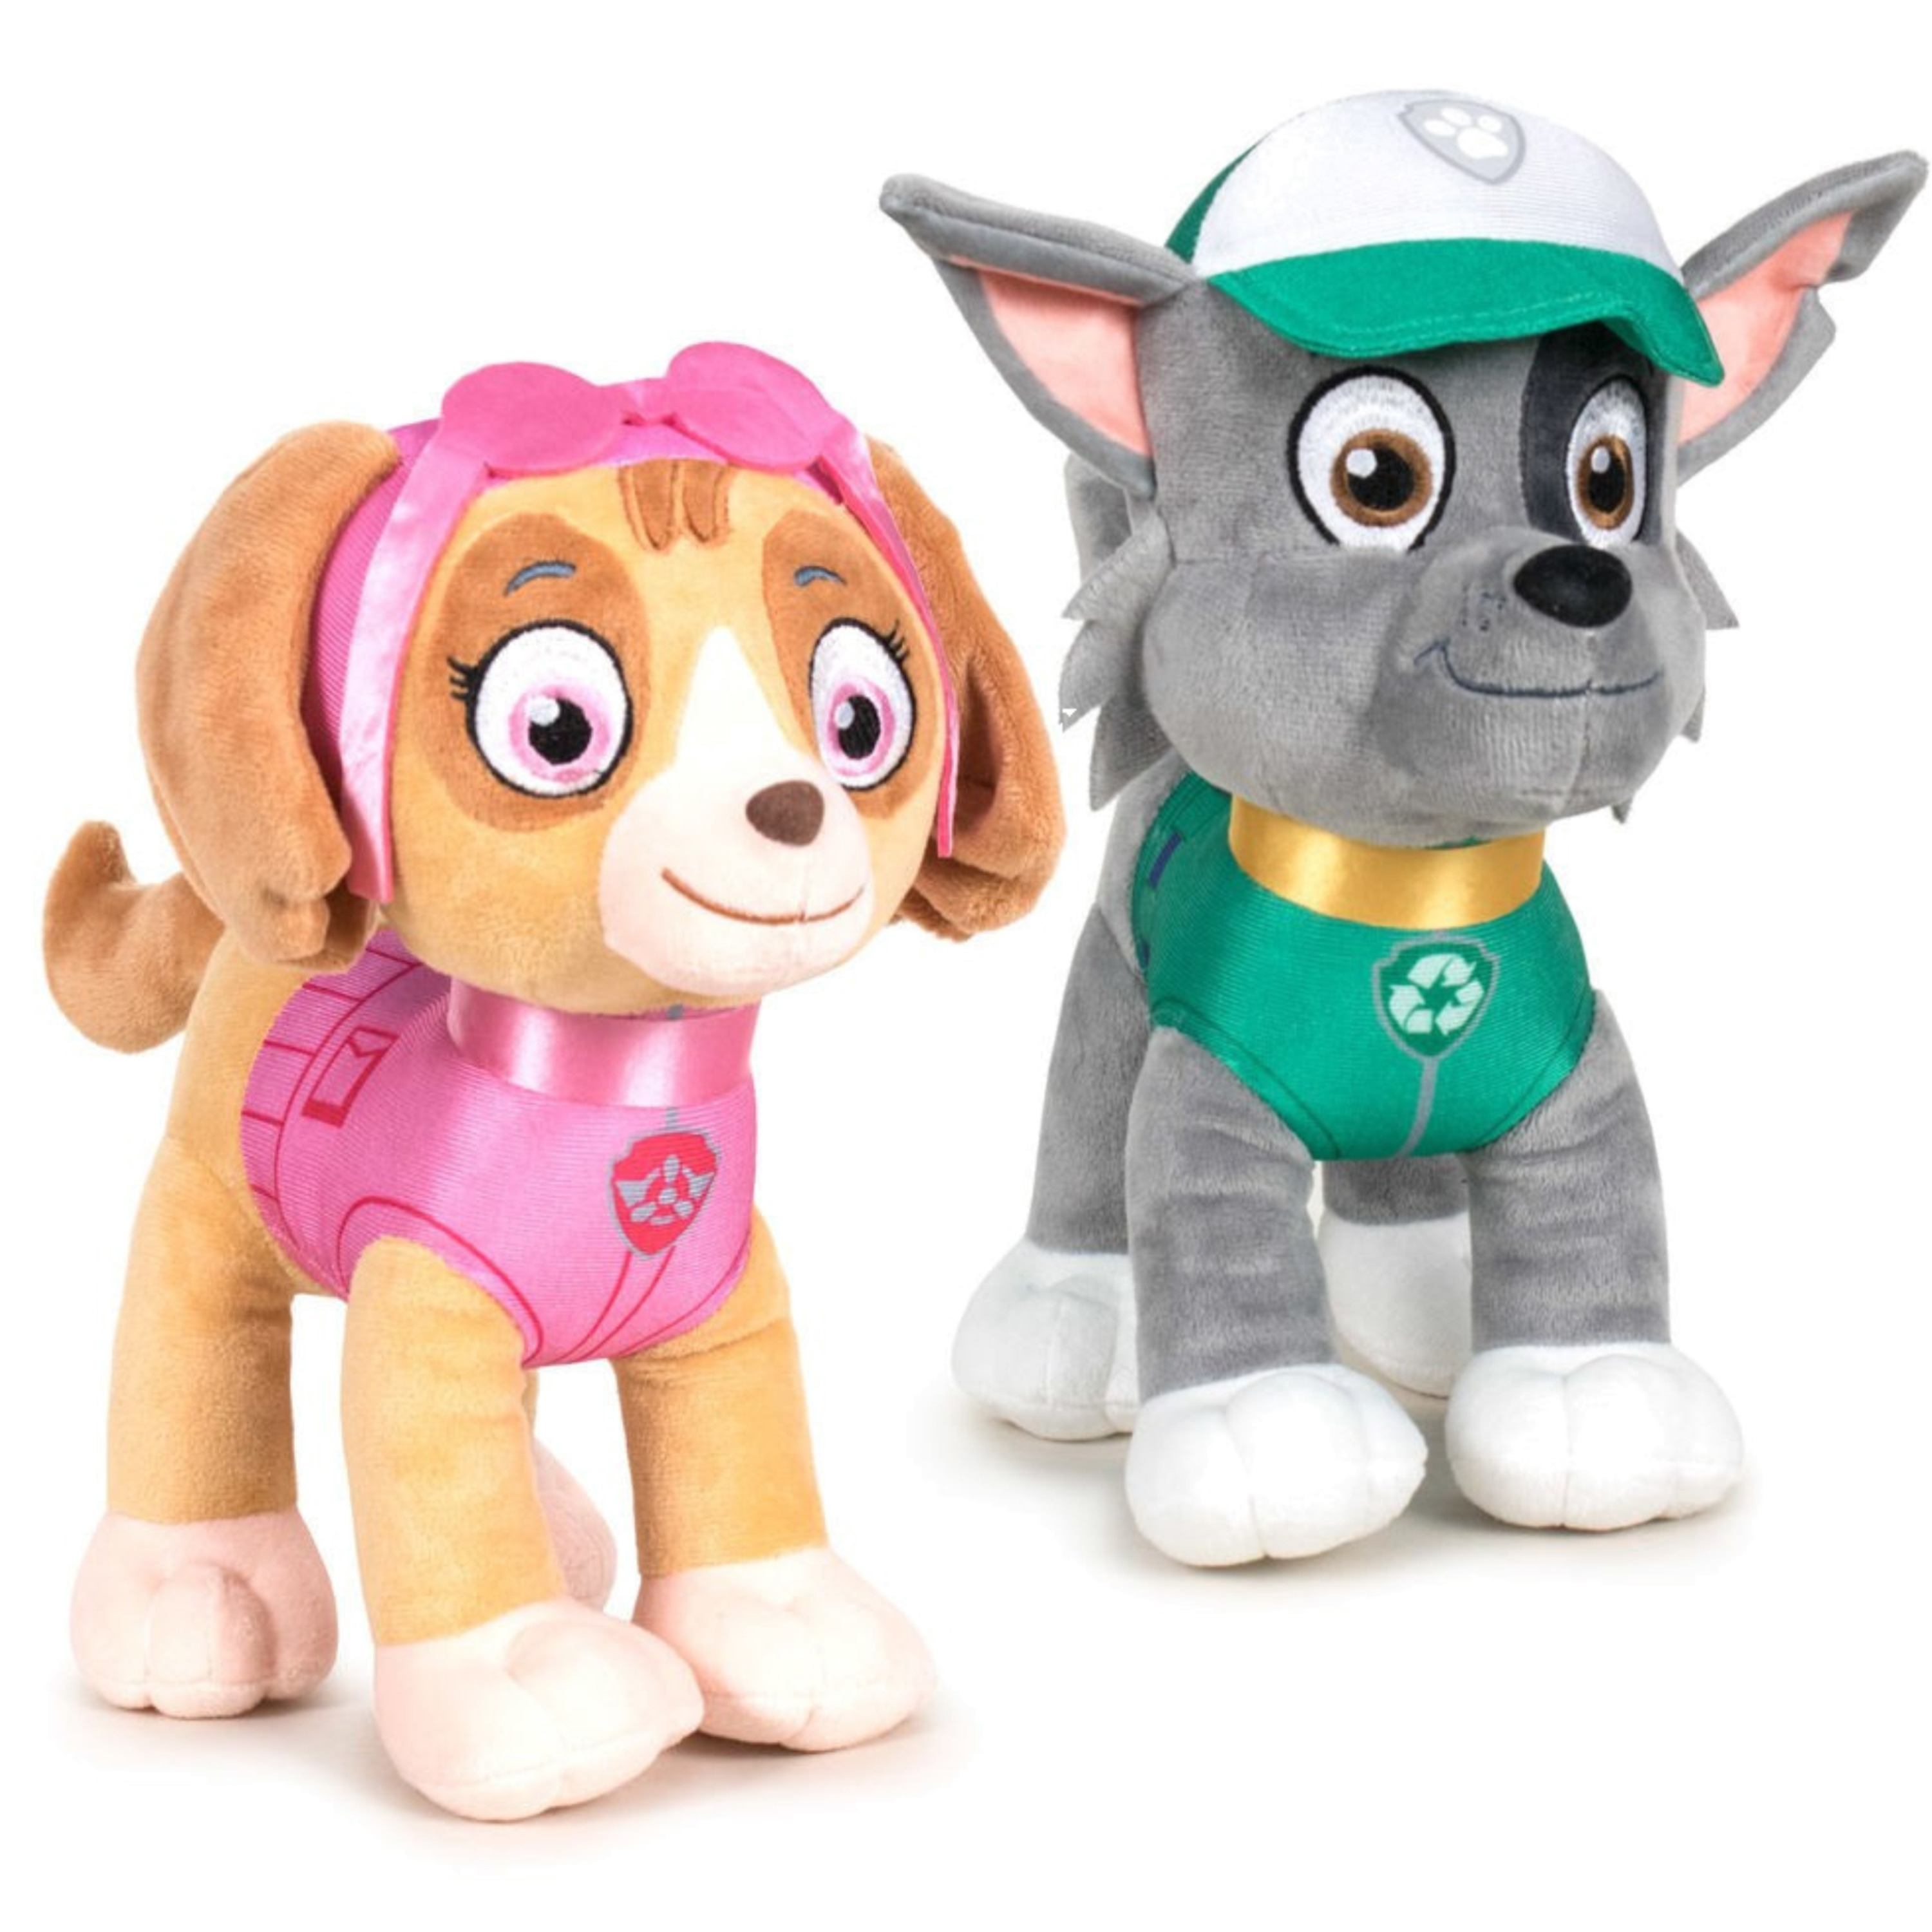 Paw Patrol figuren speelgoed knuffels set van 2x karakters Rocky en Skye 19 cm